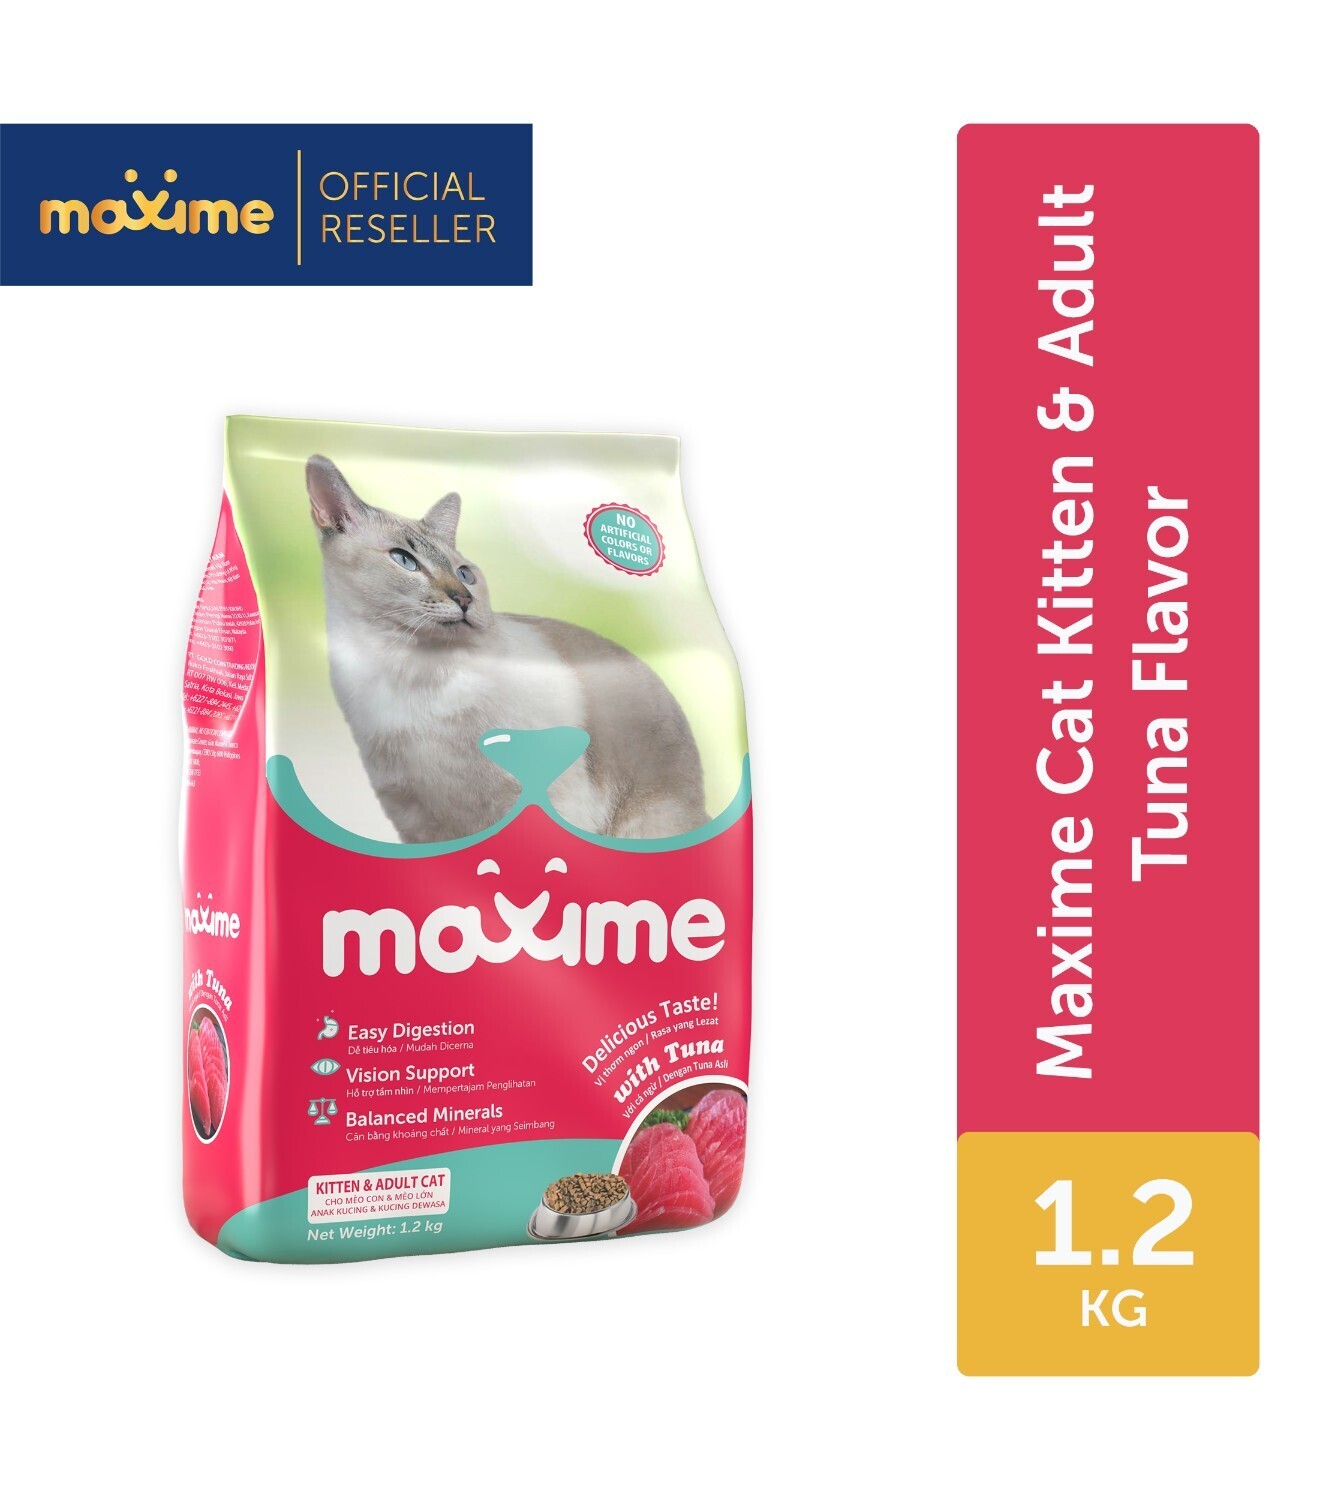 Maxime Standard Kitten Cat - Tuna - 1.2 kg Packaging